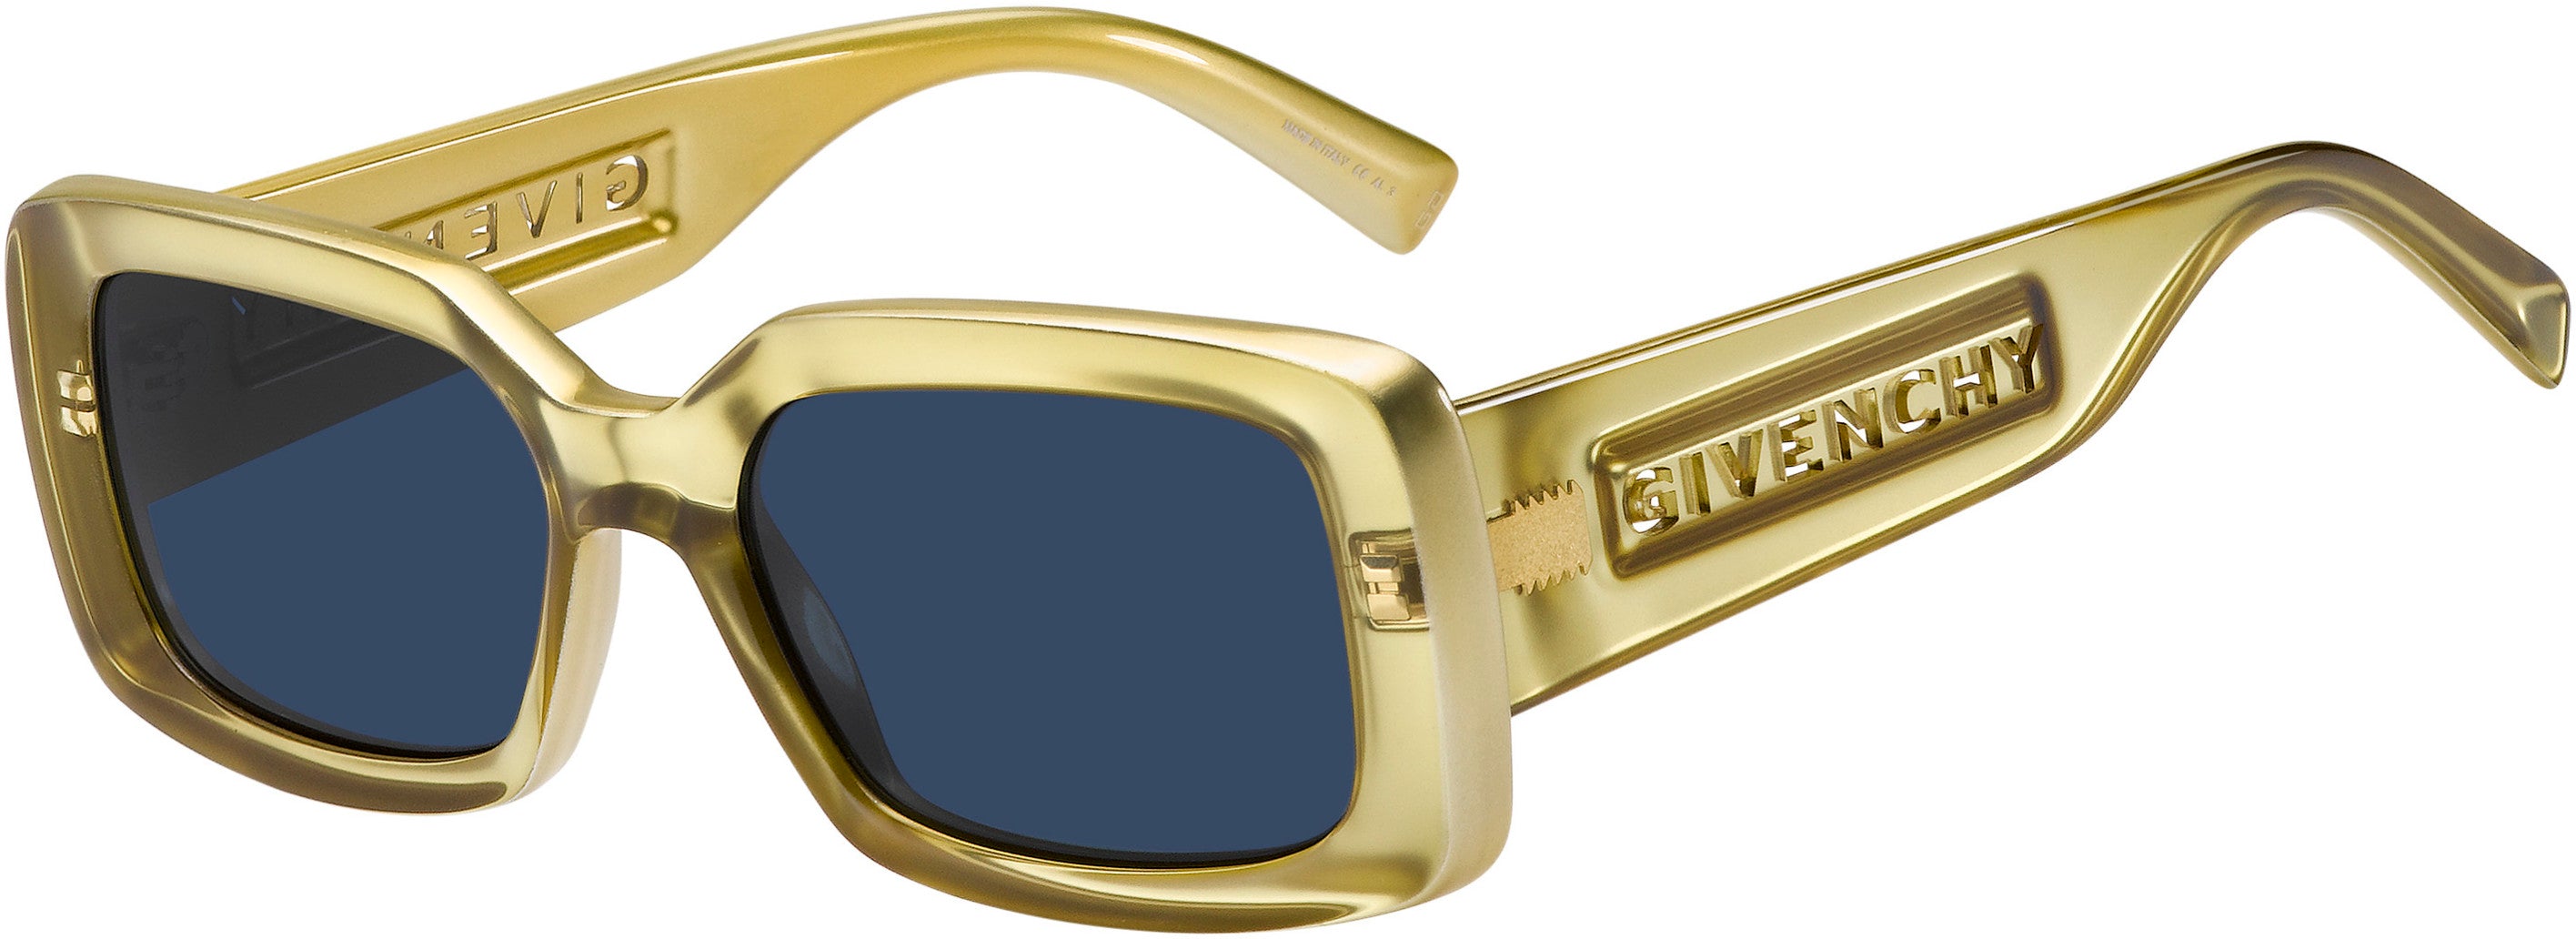  Givenchy 7201/S Rectangular Sunglasses 0J5G-0J5G  Gold (KU Blue)